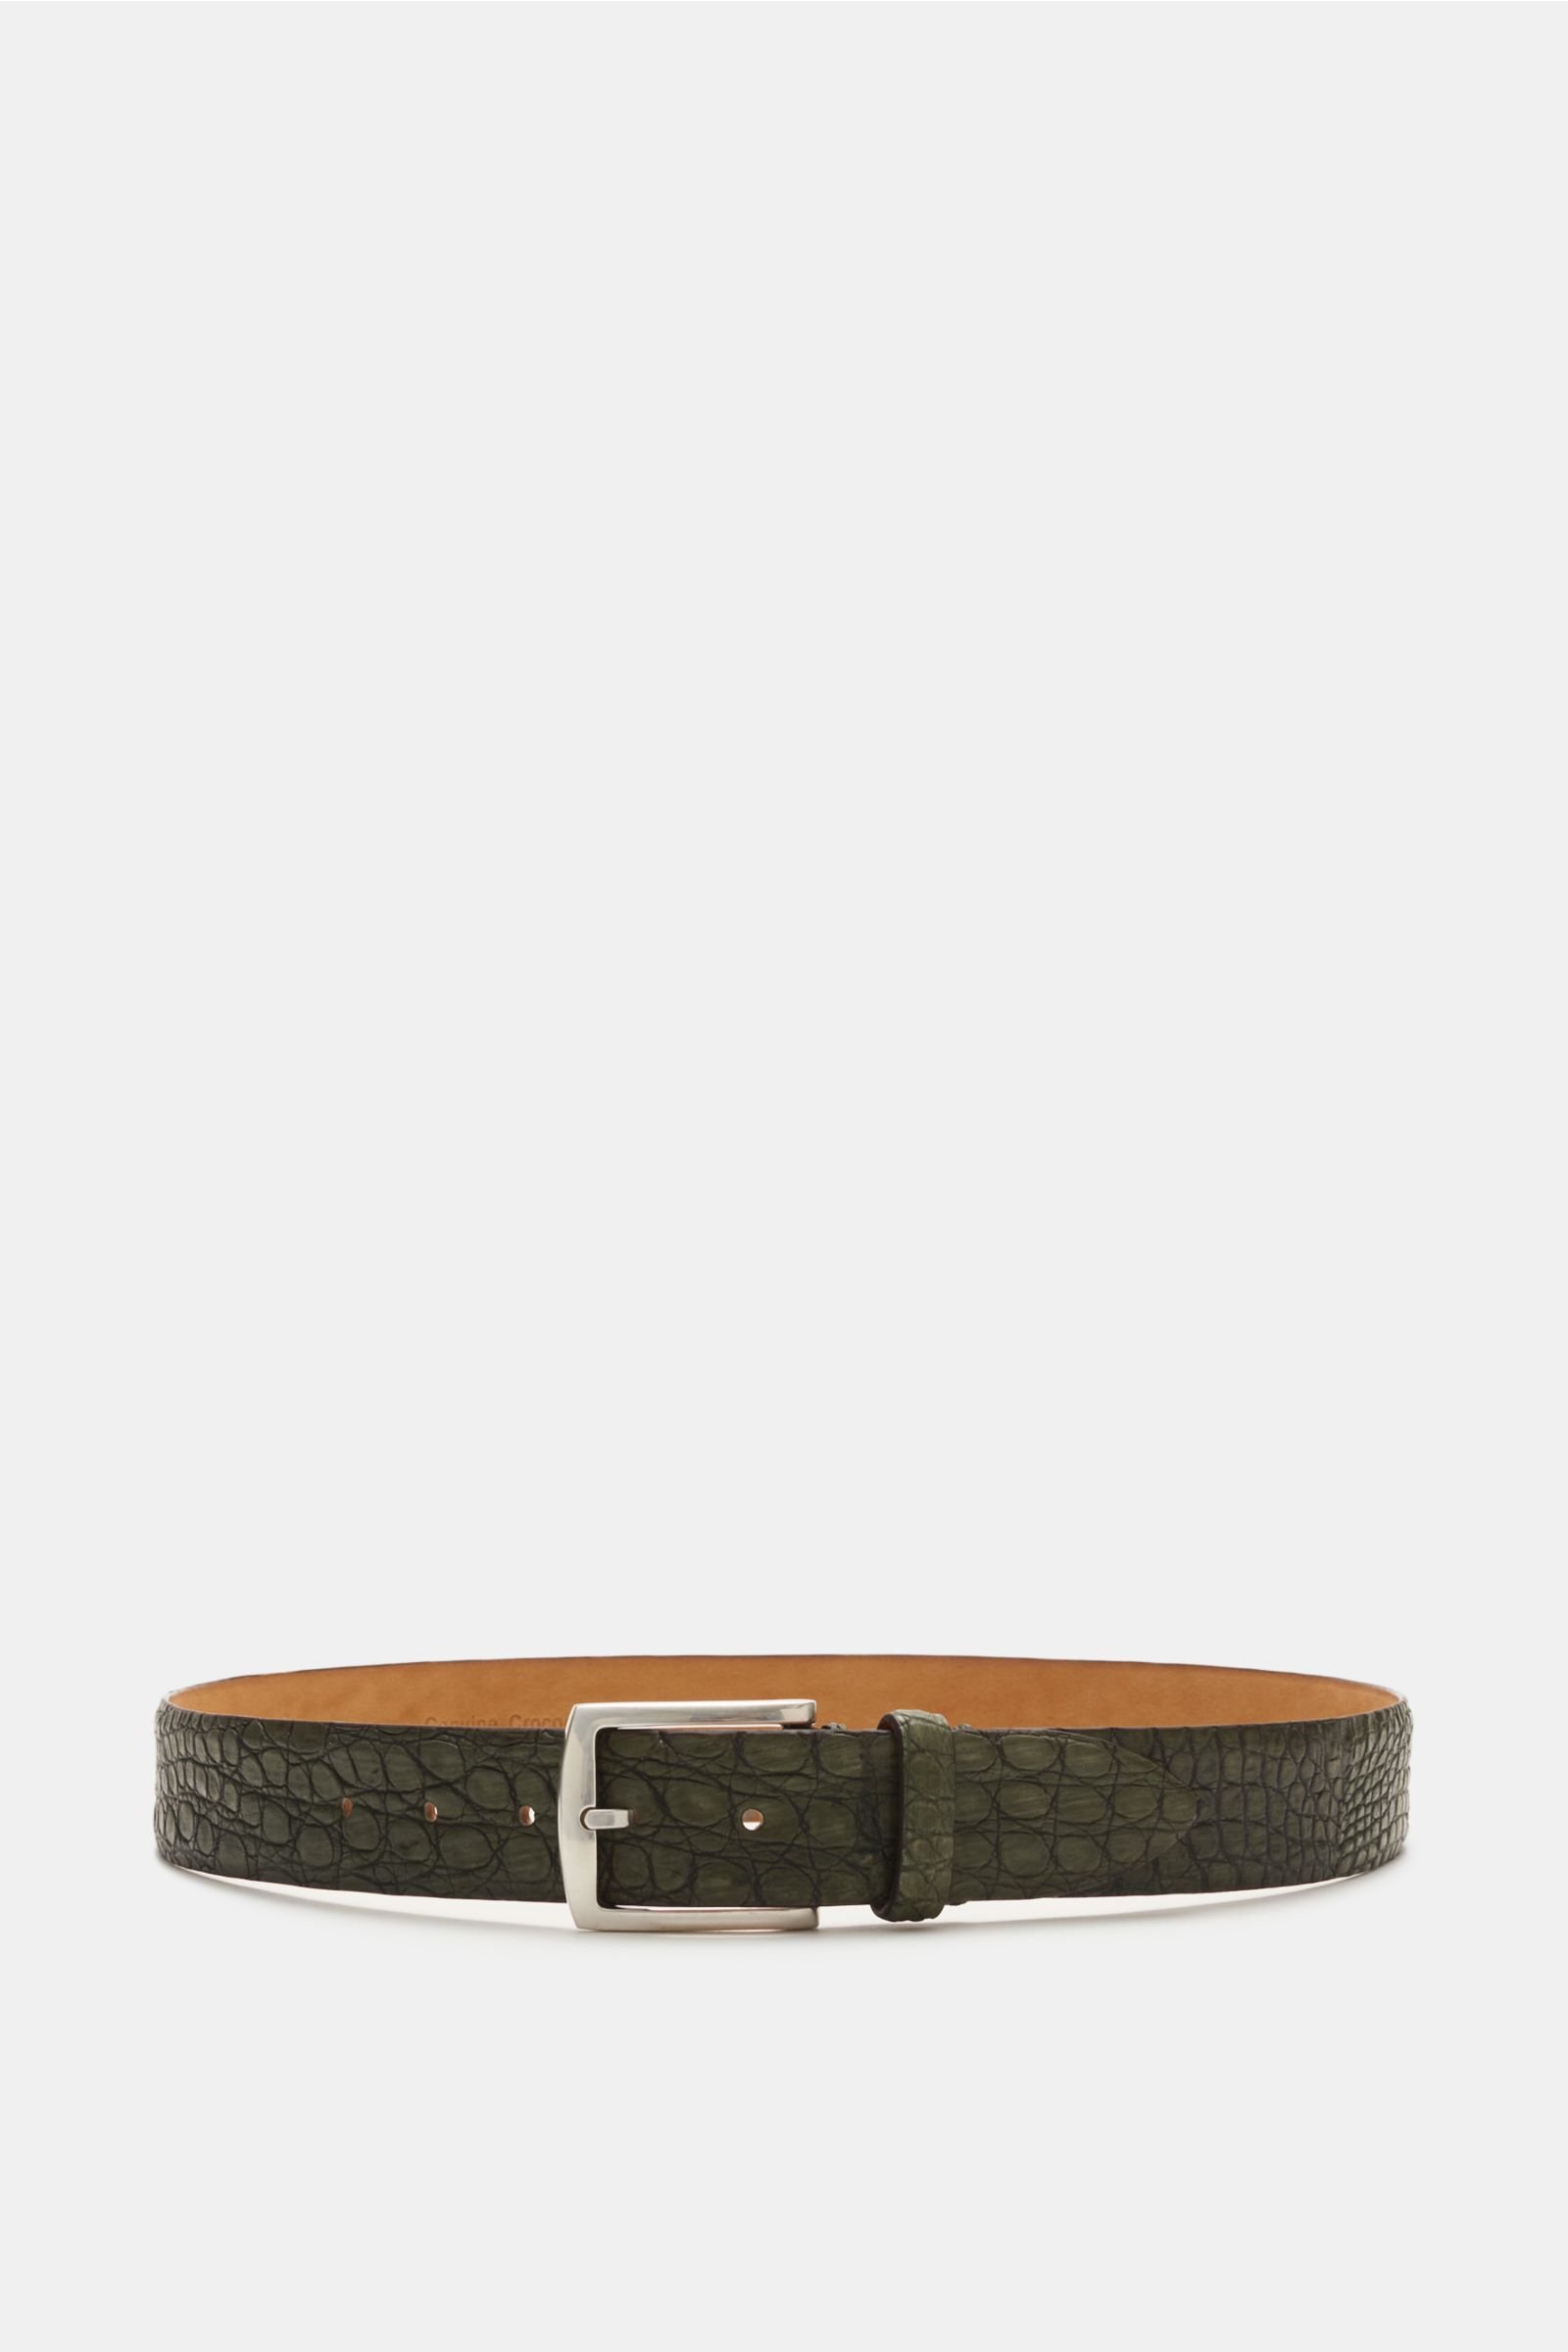 Crocodile leather belt olive